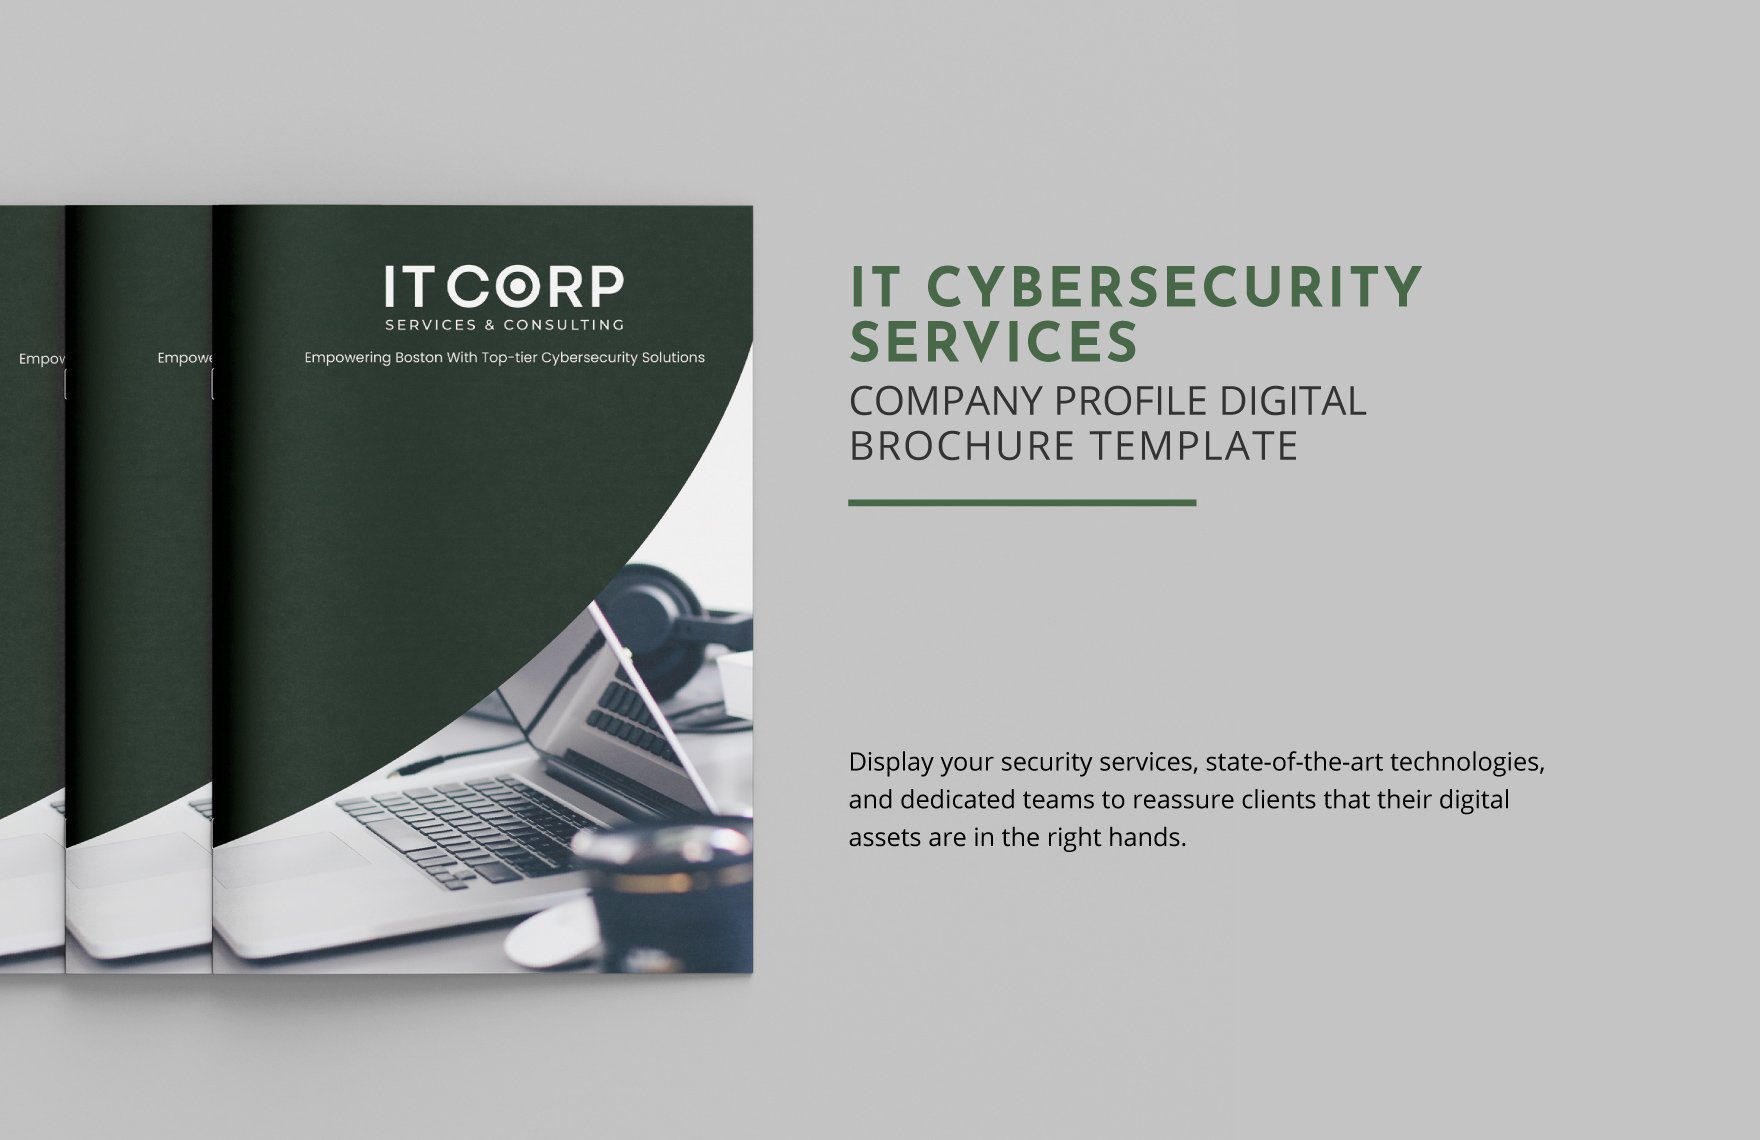 IT Cybersecurity Services Company Profile Digital Brochure Template